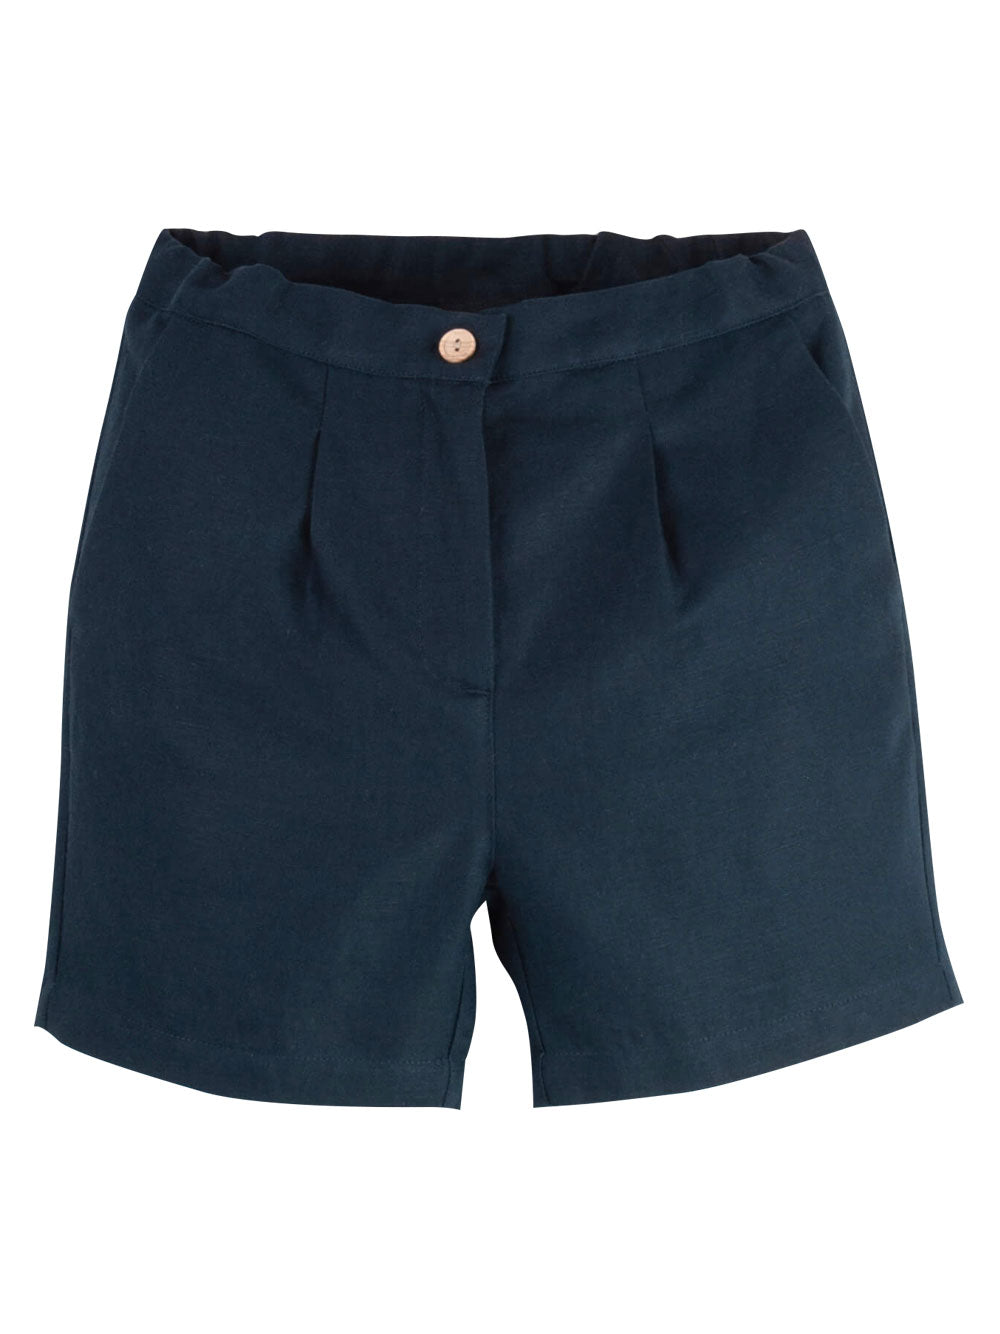 Navy Blue Chino Shorts